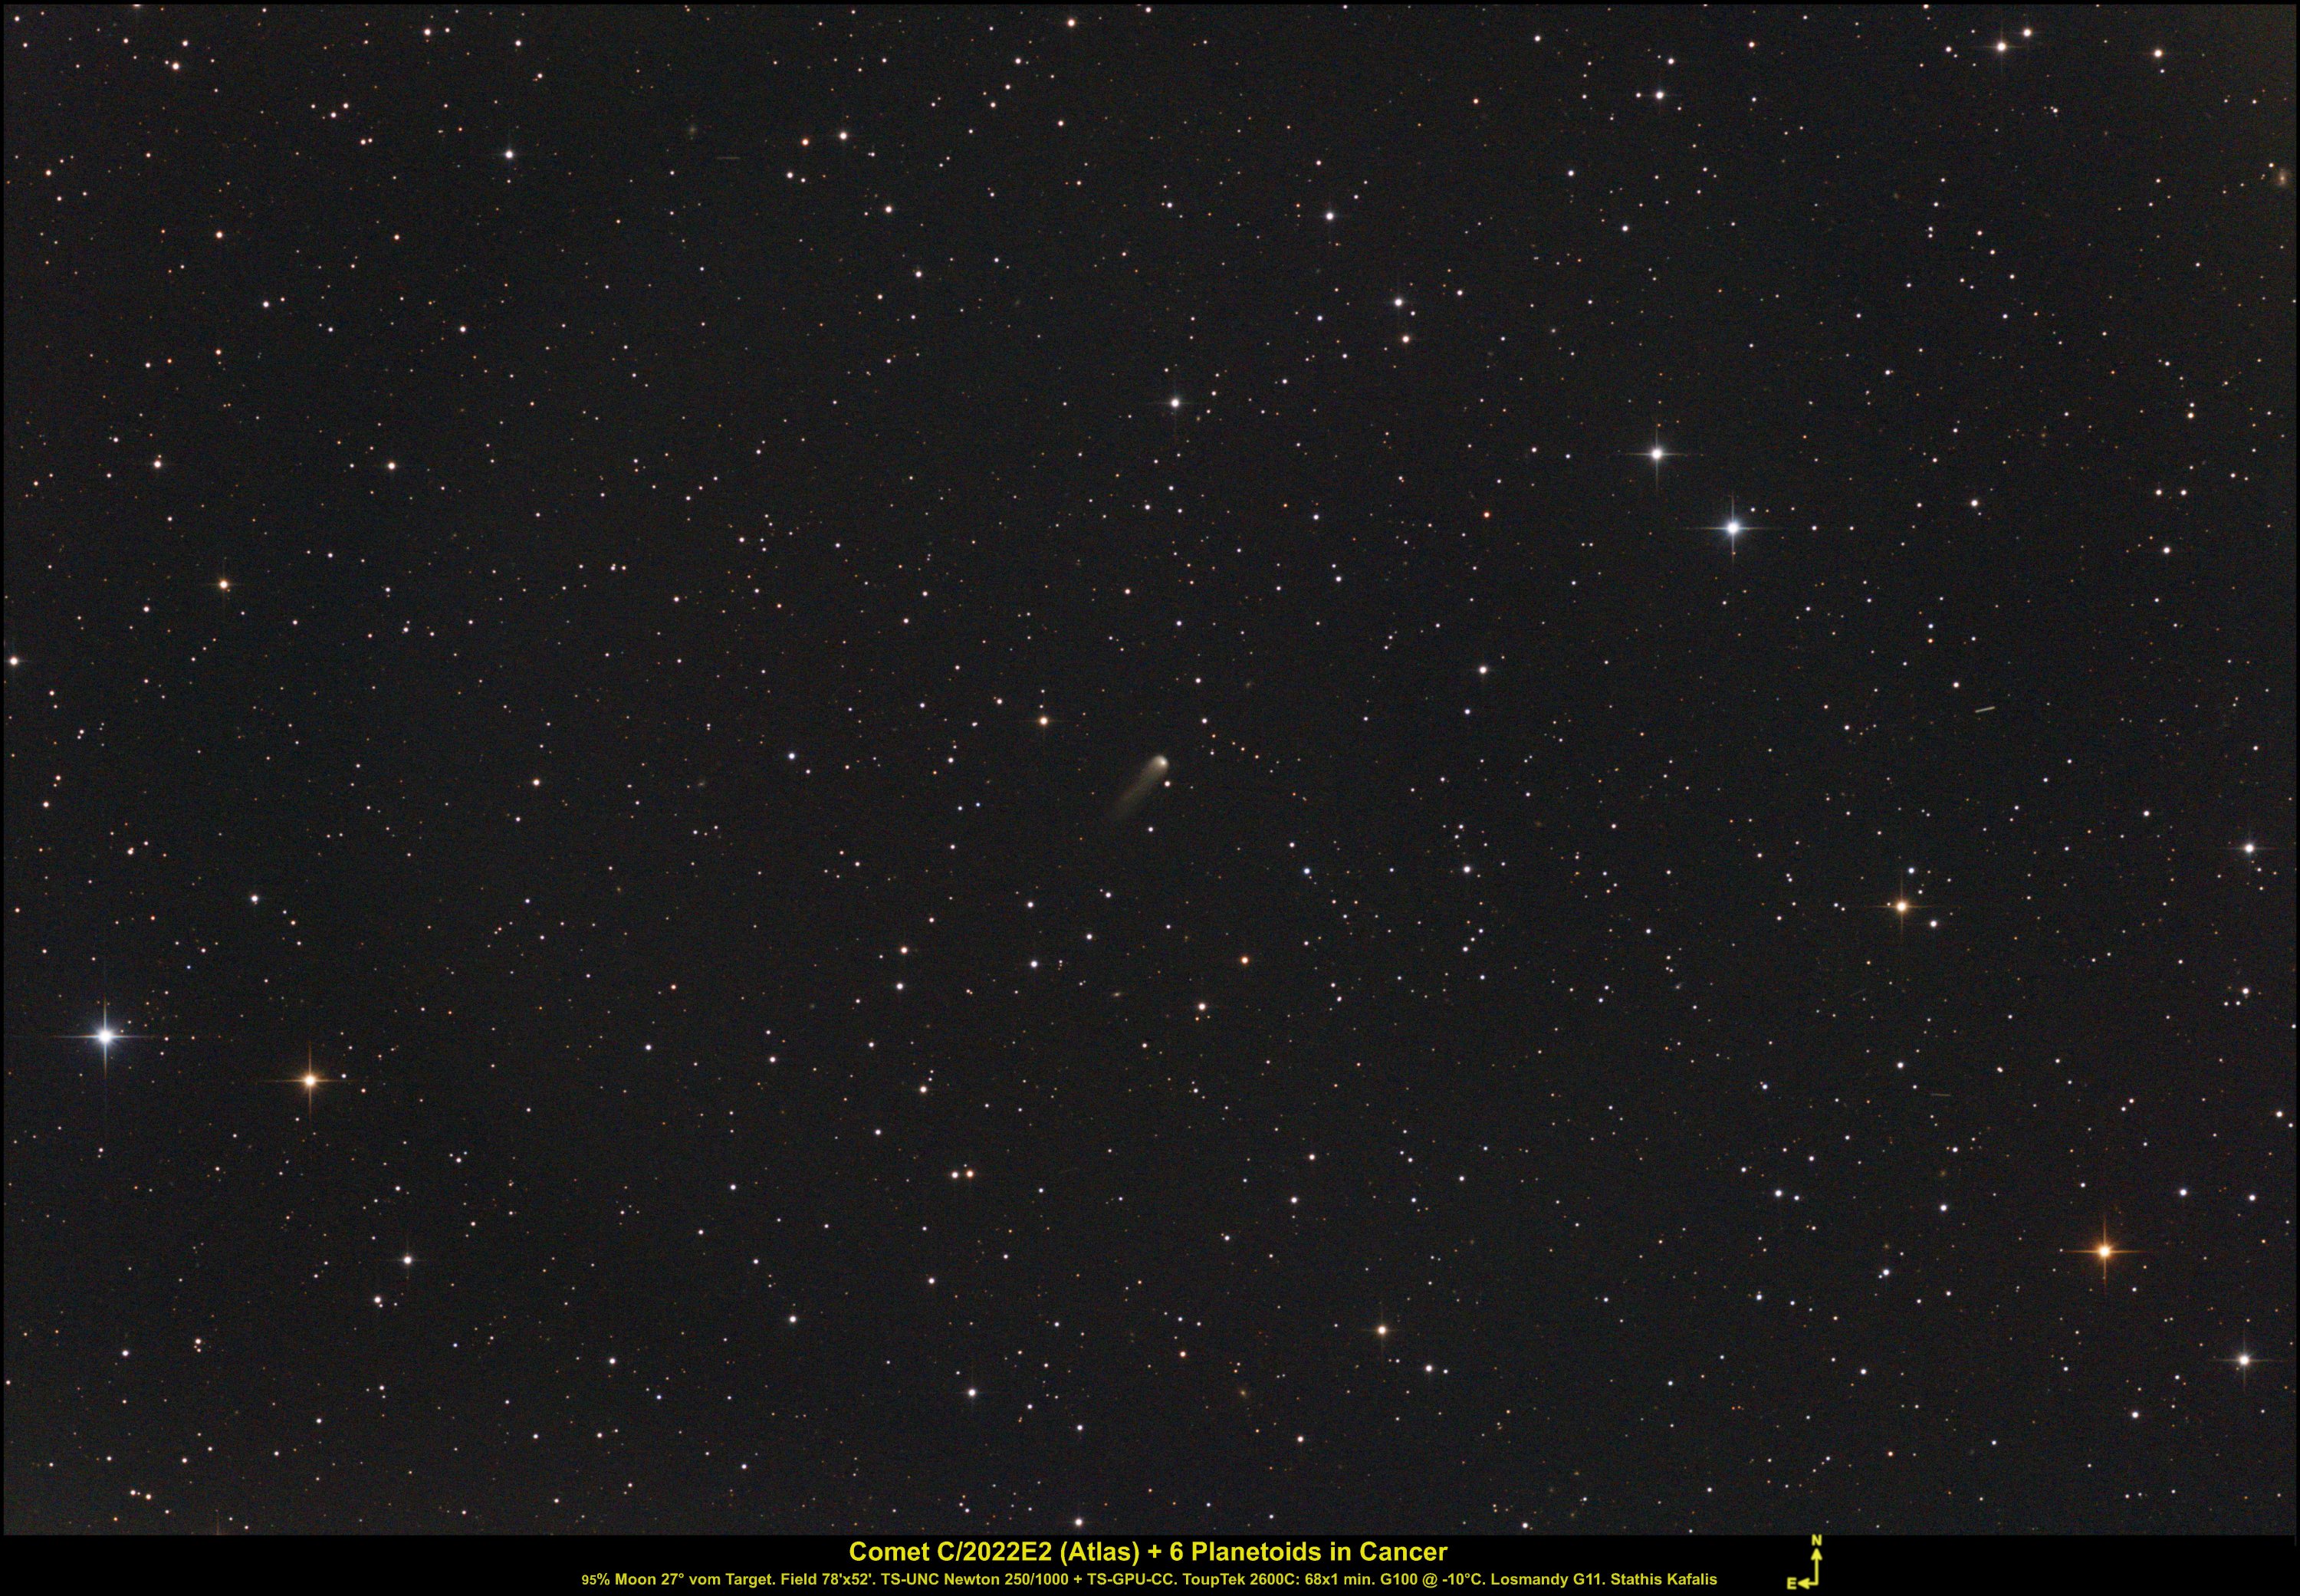 12624-komet-c-2022-e2-atlas-6-planetoiden-nahe-m44-im-krebs